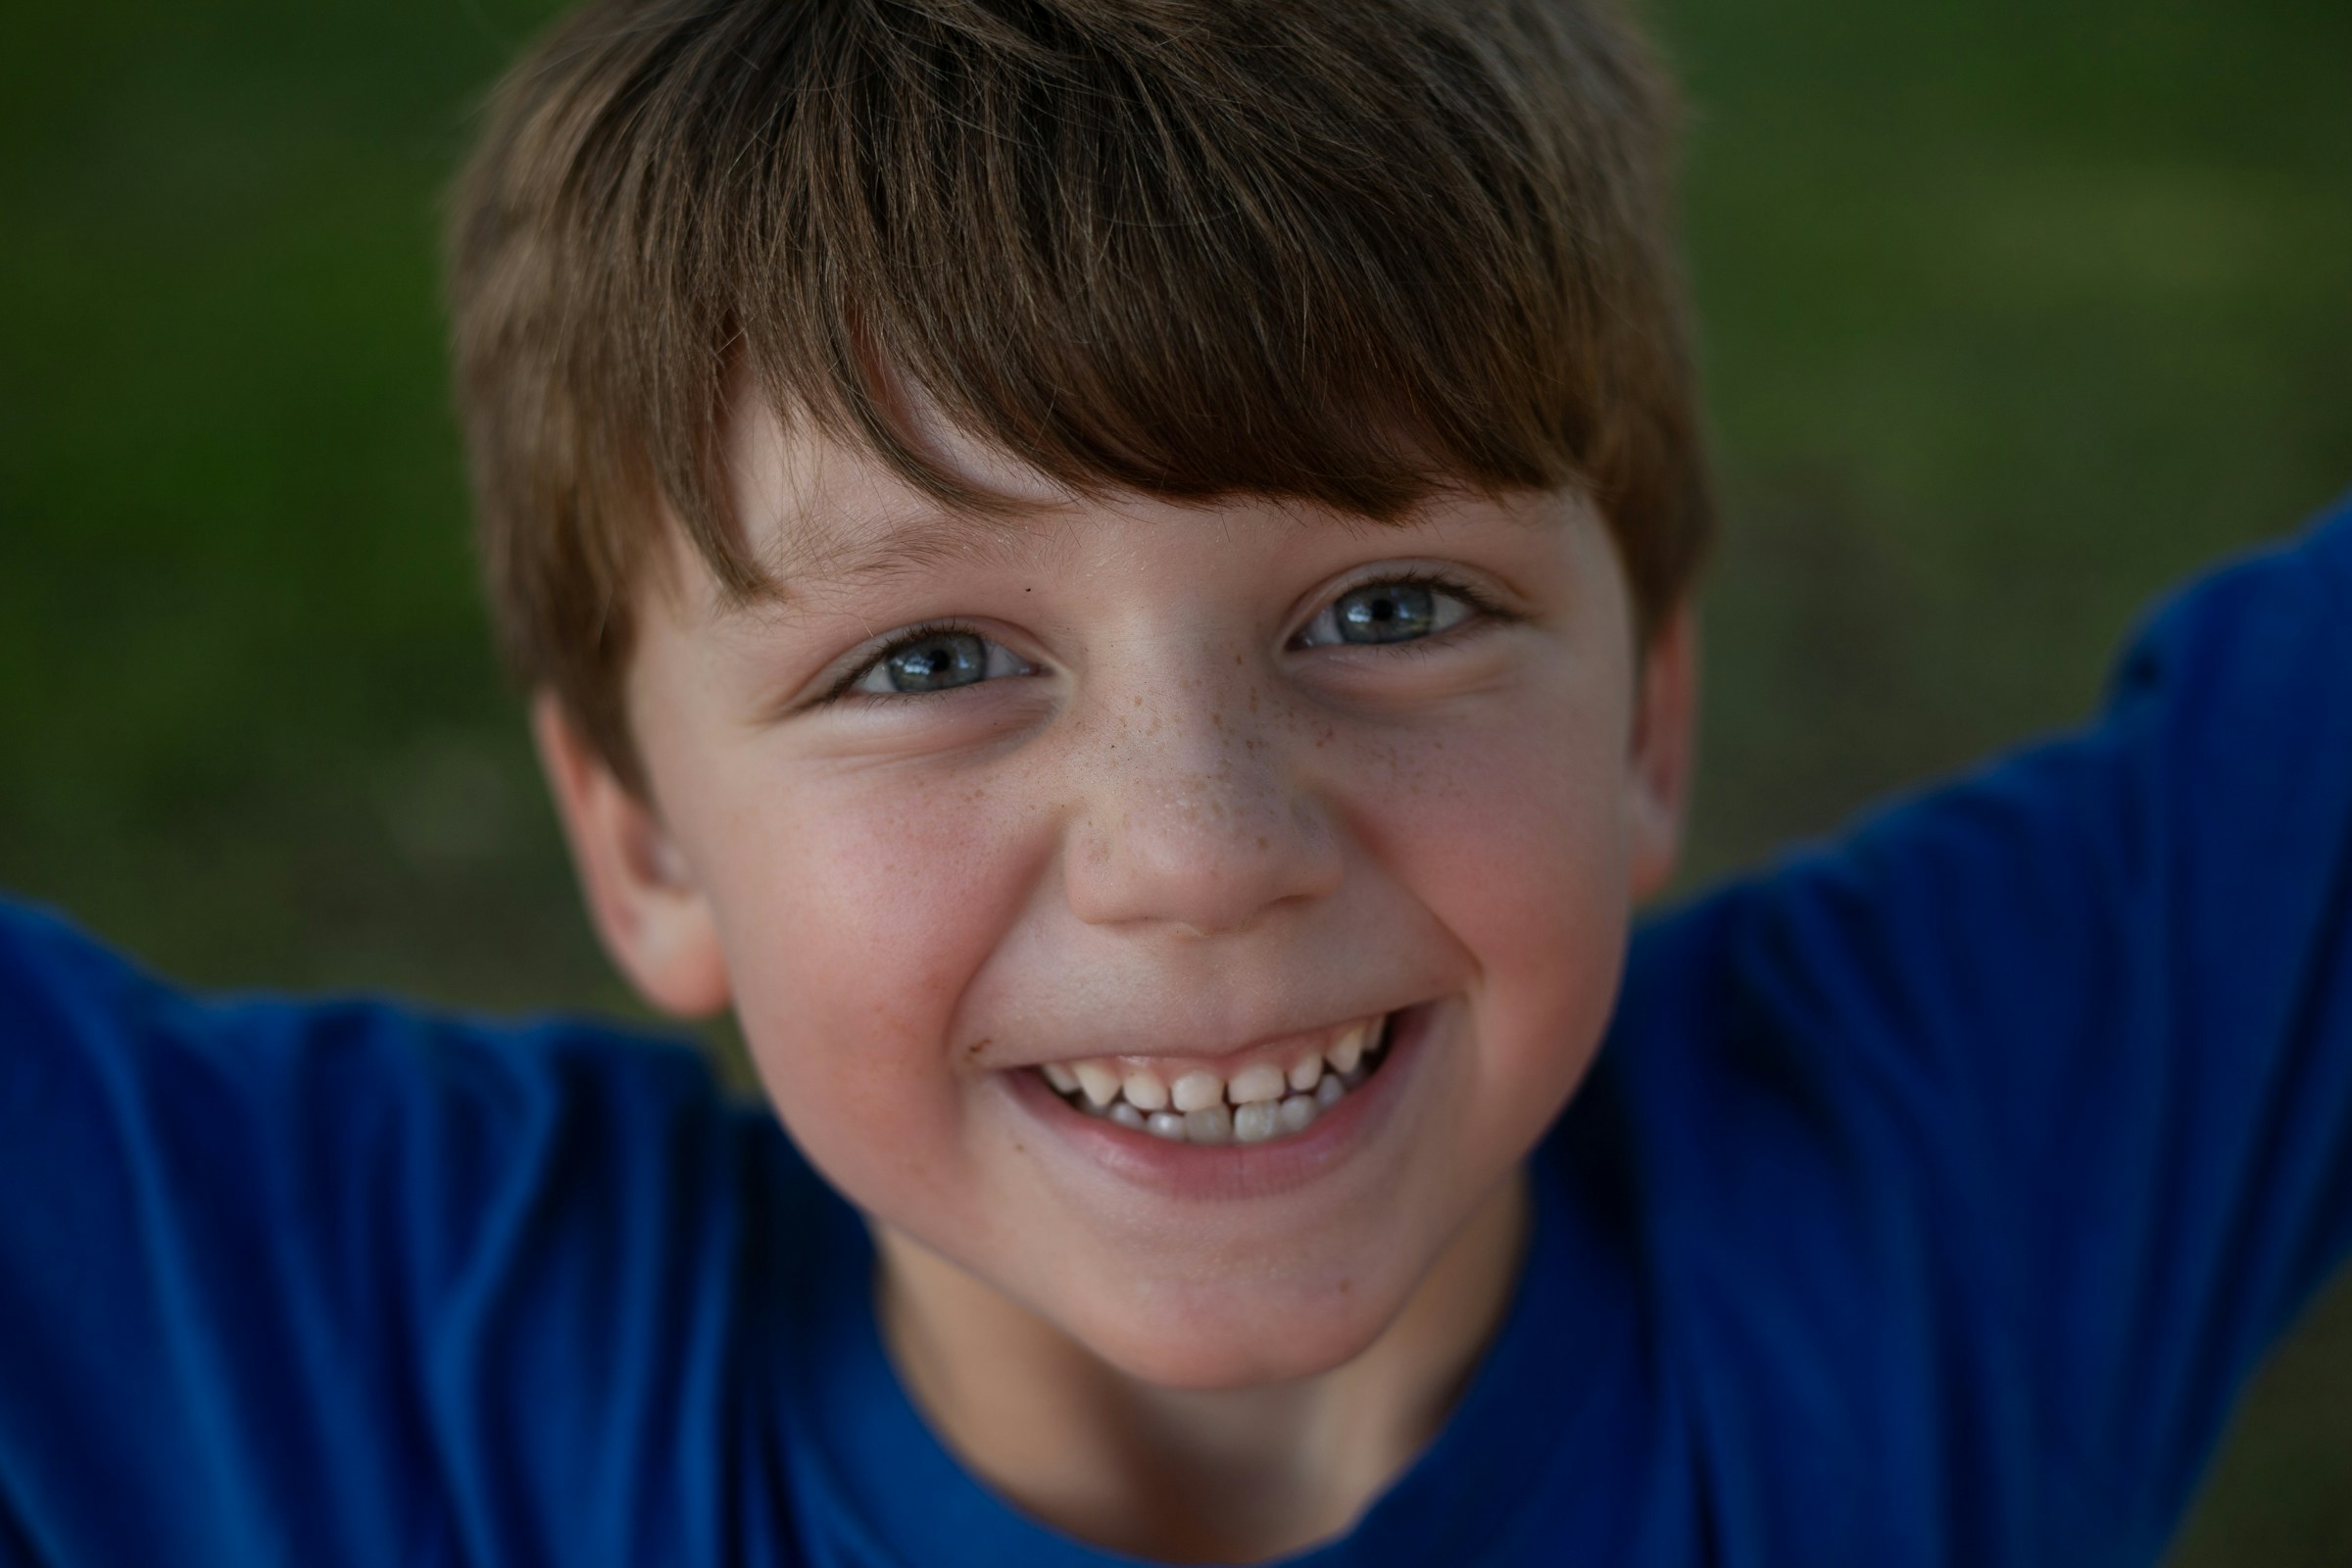 A smiling little boy in a blue shirt | Source: Unsplash